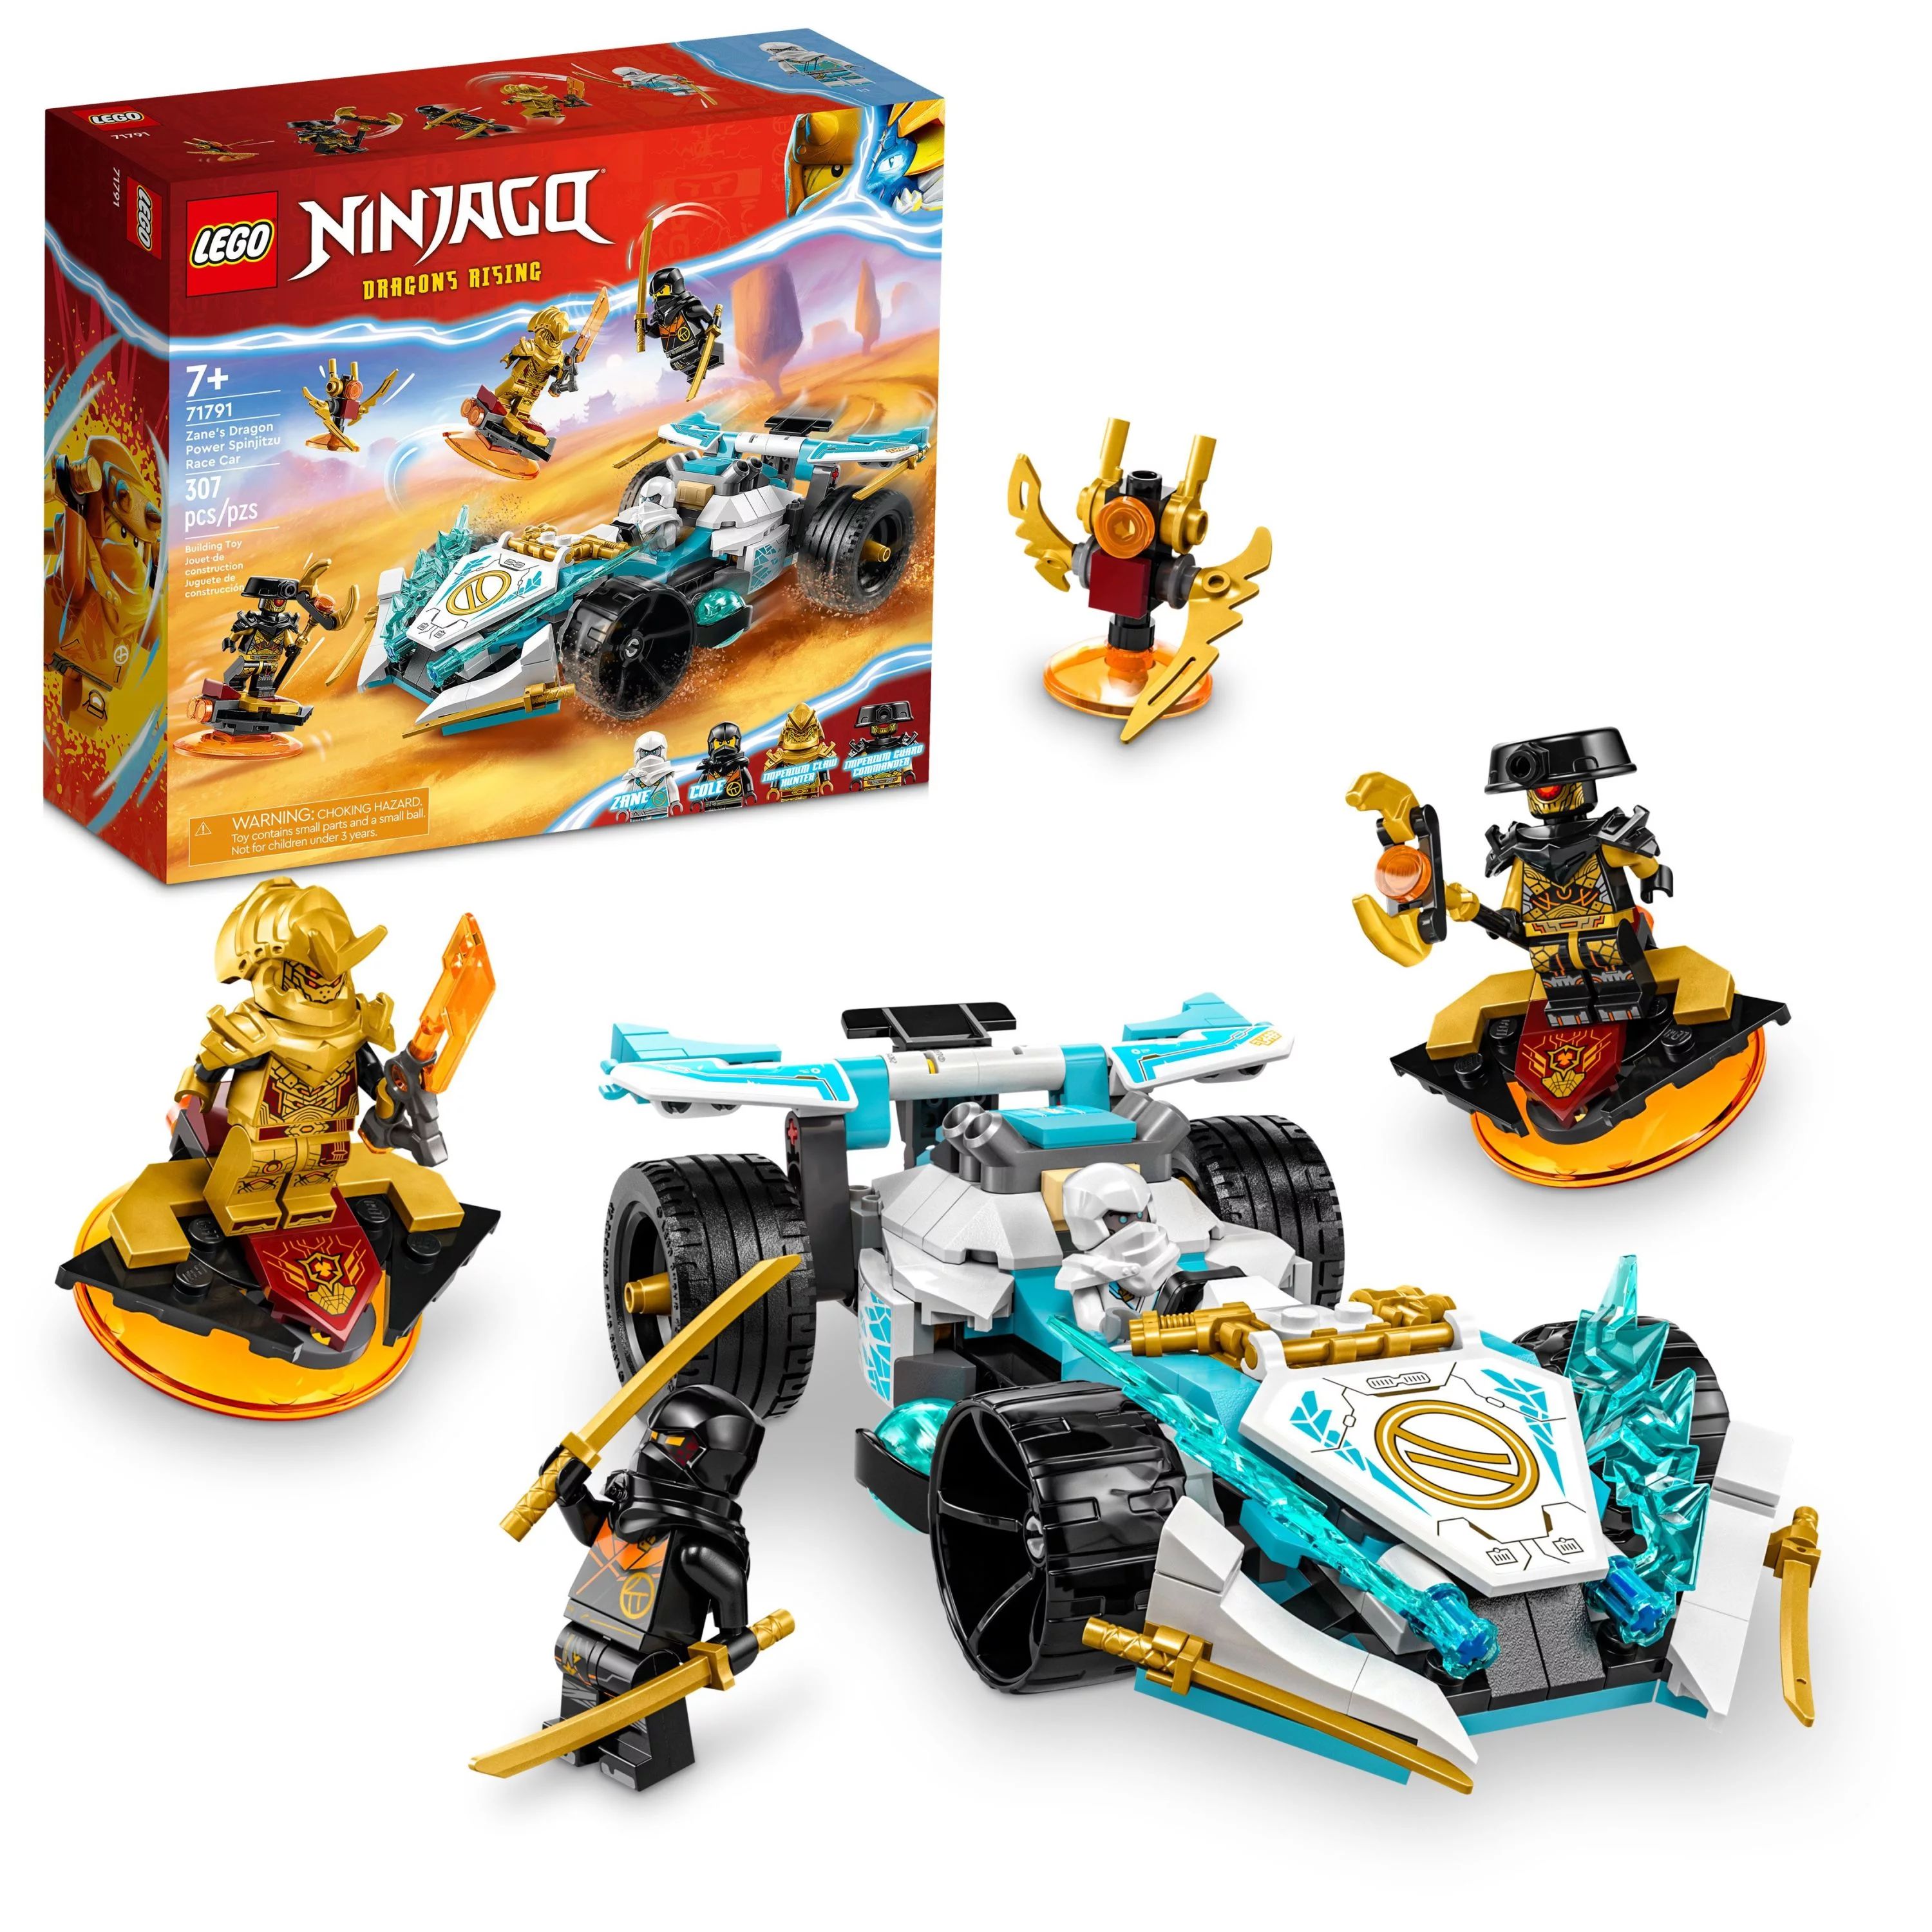 LEGO NINJAGO Zane’s Dragon Power Spinjitzu Race Car 71791 Building Toy Set, Features a Ninja Ca... | Walmart (US)